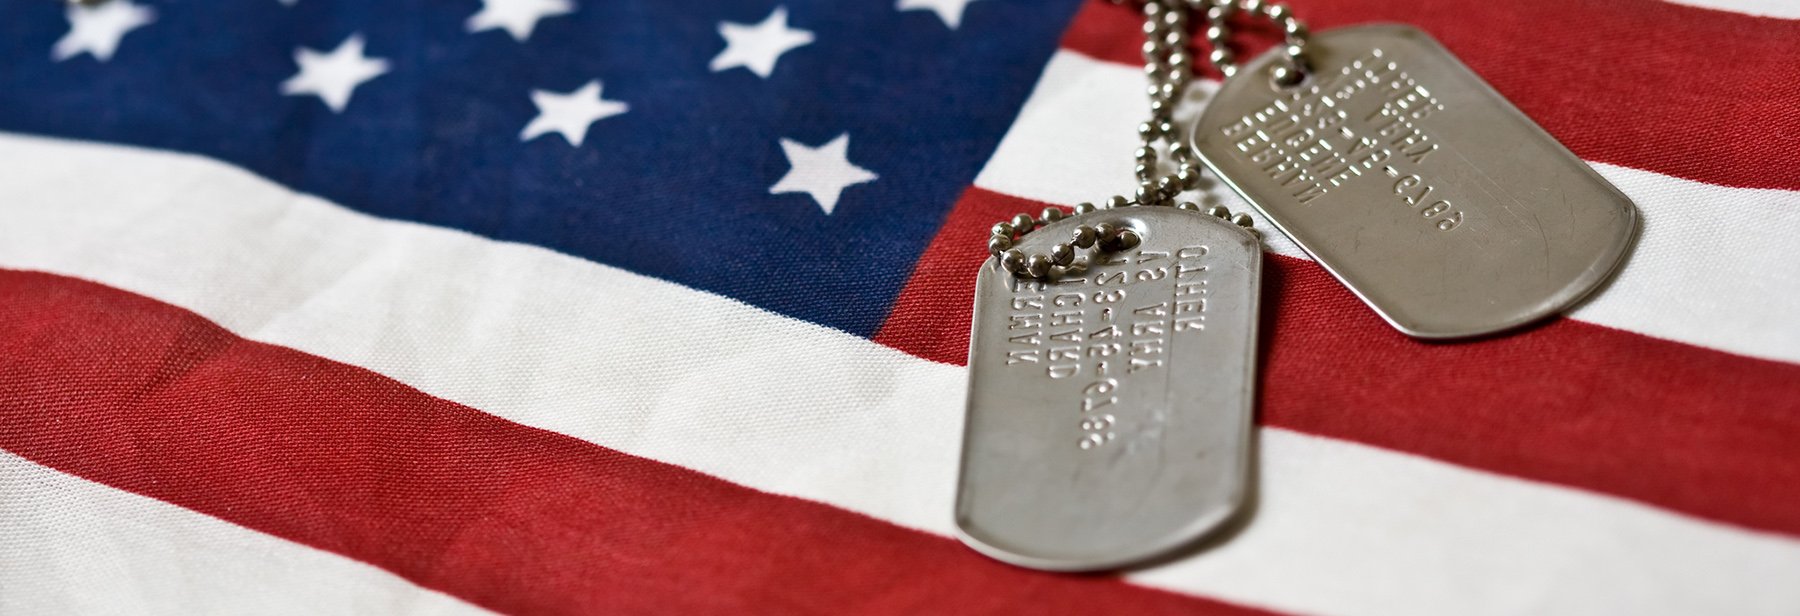 Image of military dog tags and US flag